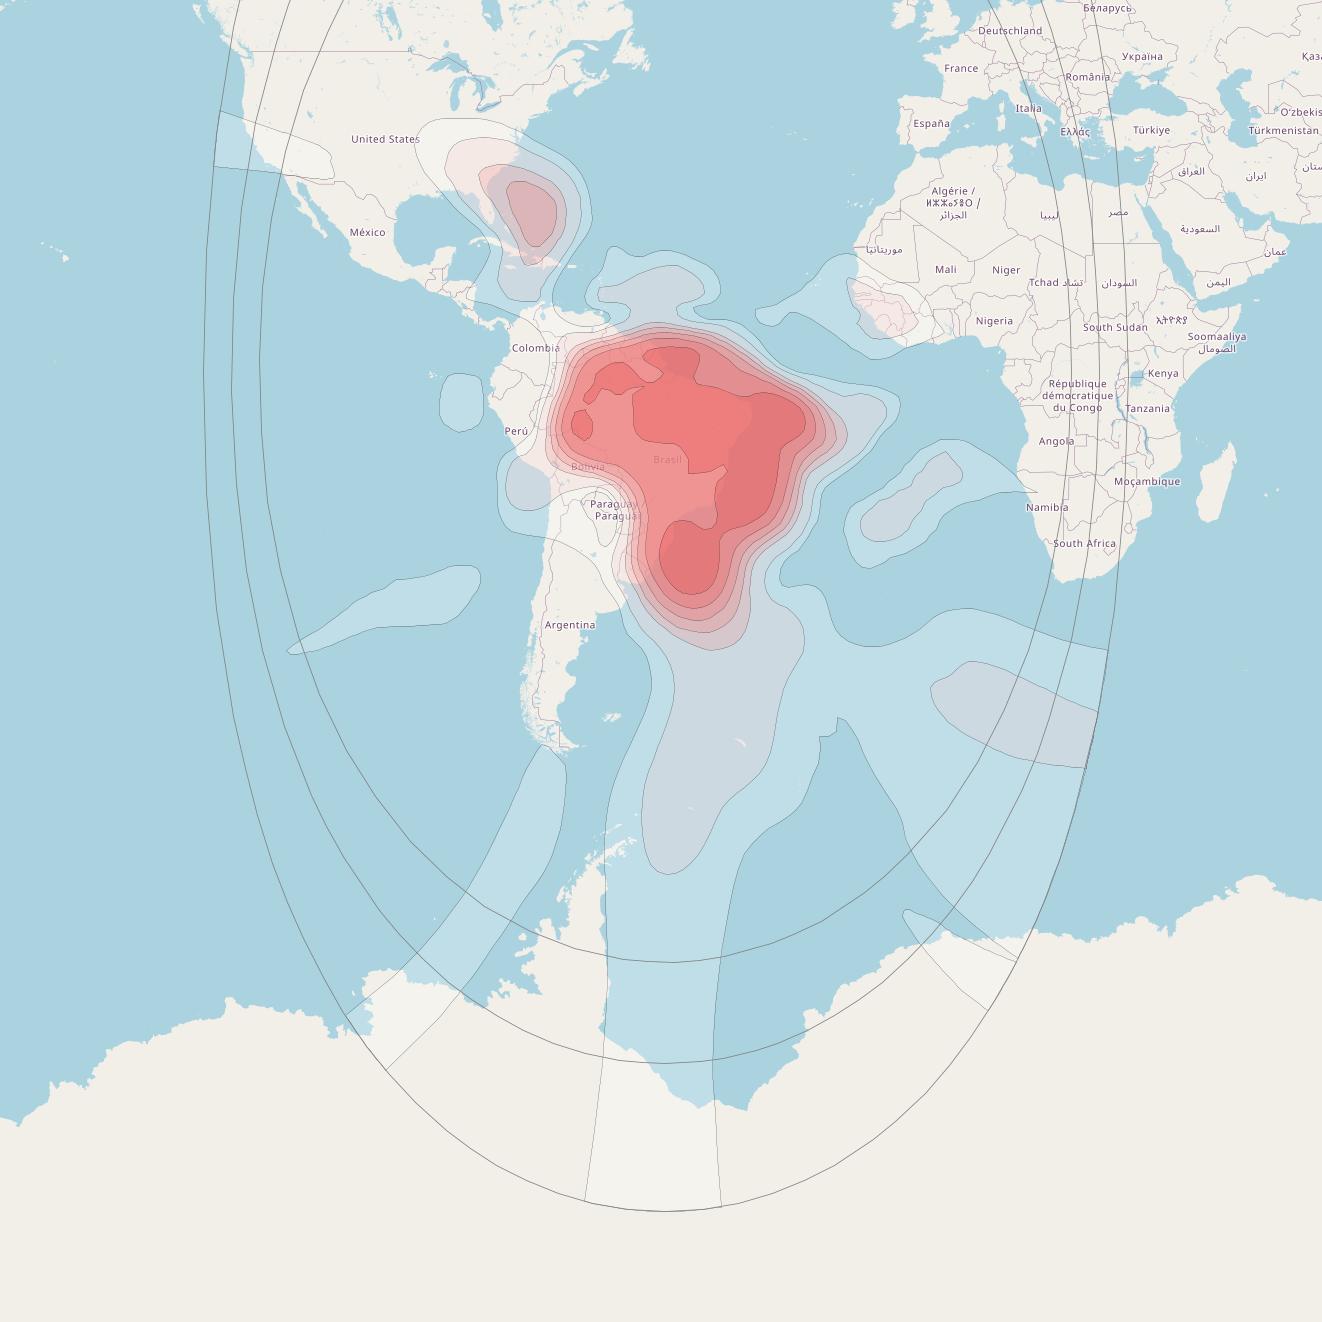 Intelsat 9 at 50° W downlink Ku-band Brazil beam coverage map